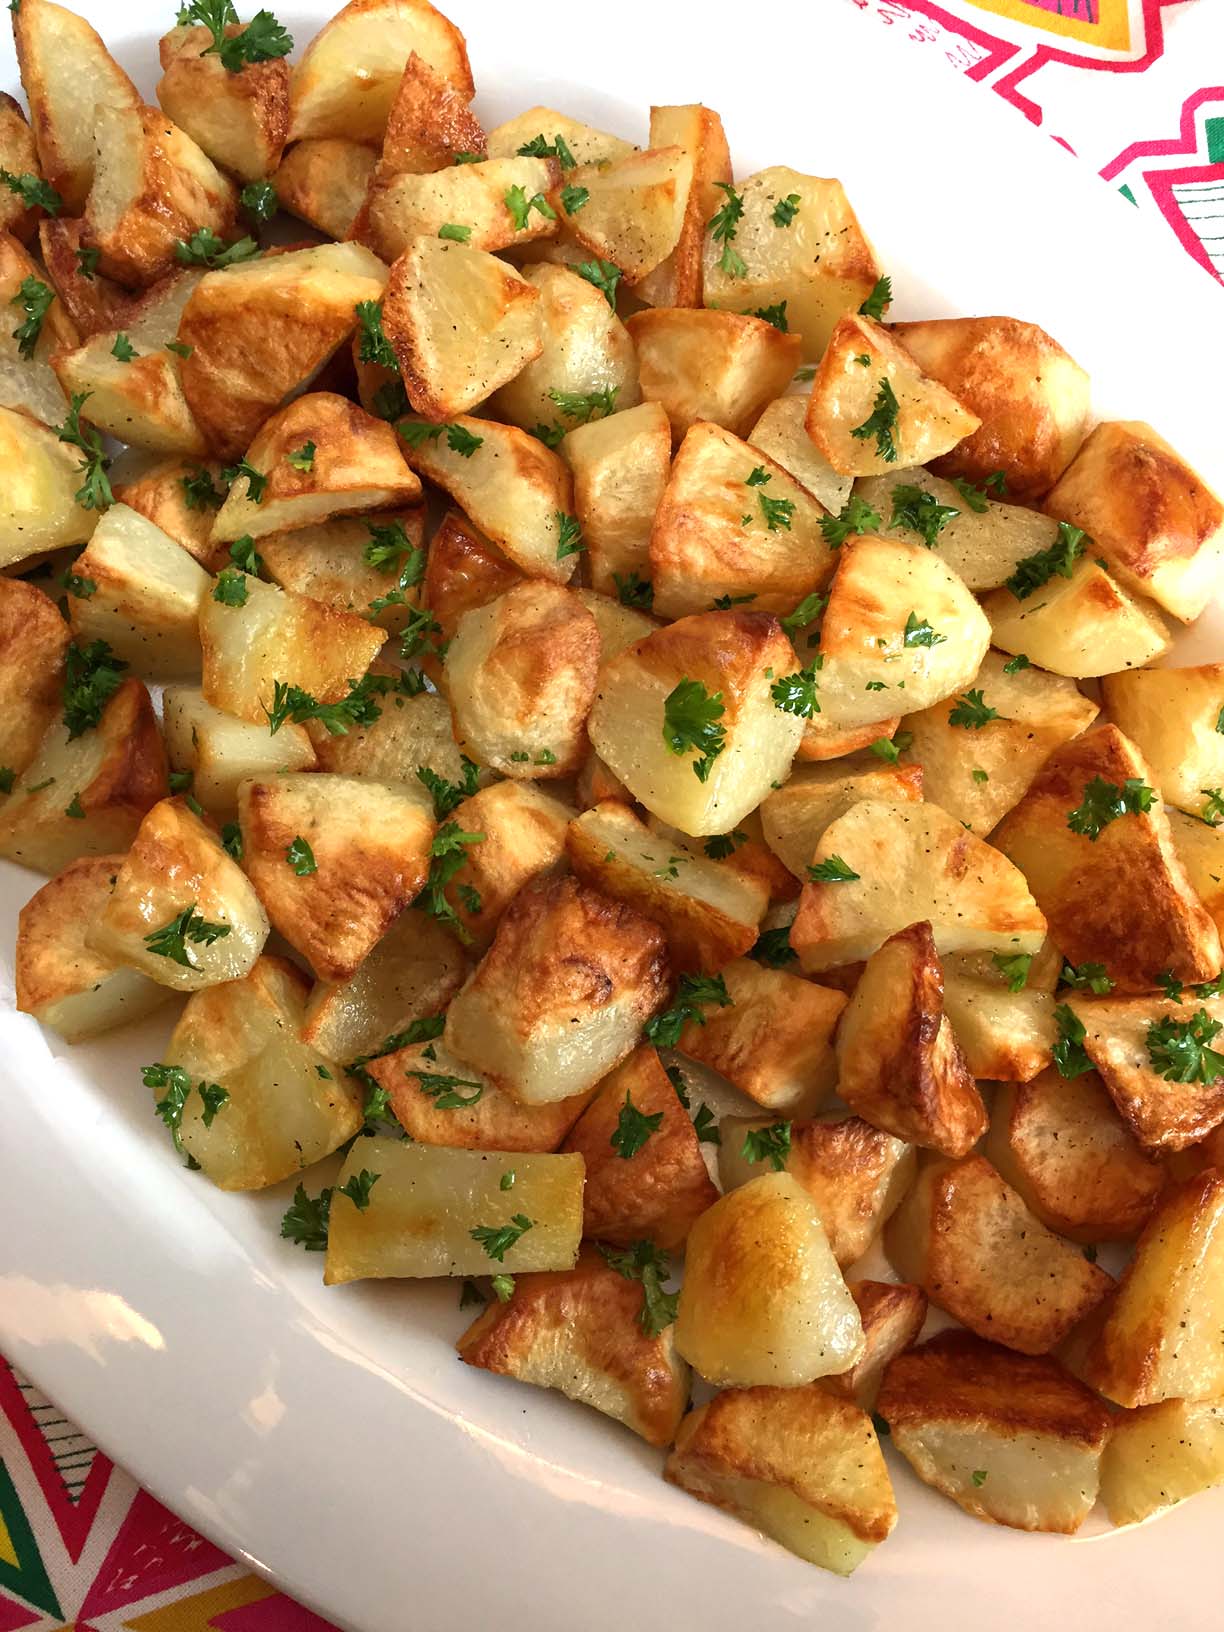 https://www.melaniecooks.com/wp-content/uploads/2008/05/roasted_potatoes_recipe.jpg